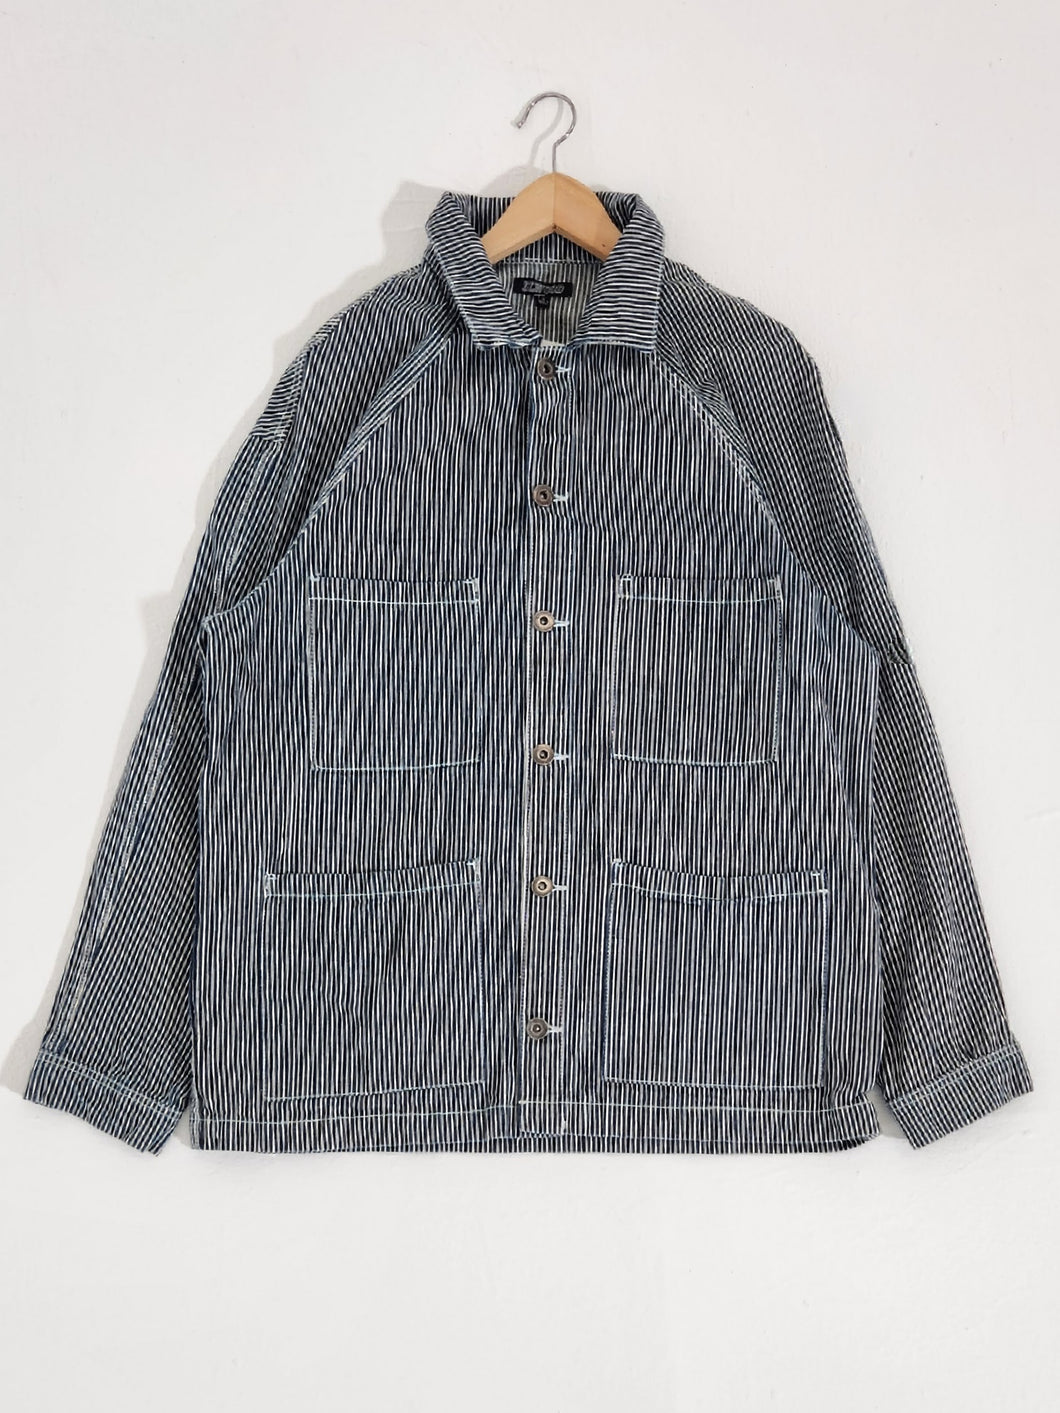 Striped Chore Jacket Sz. L